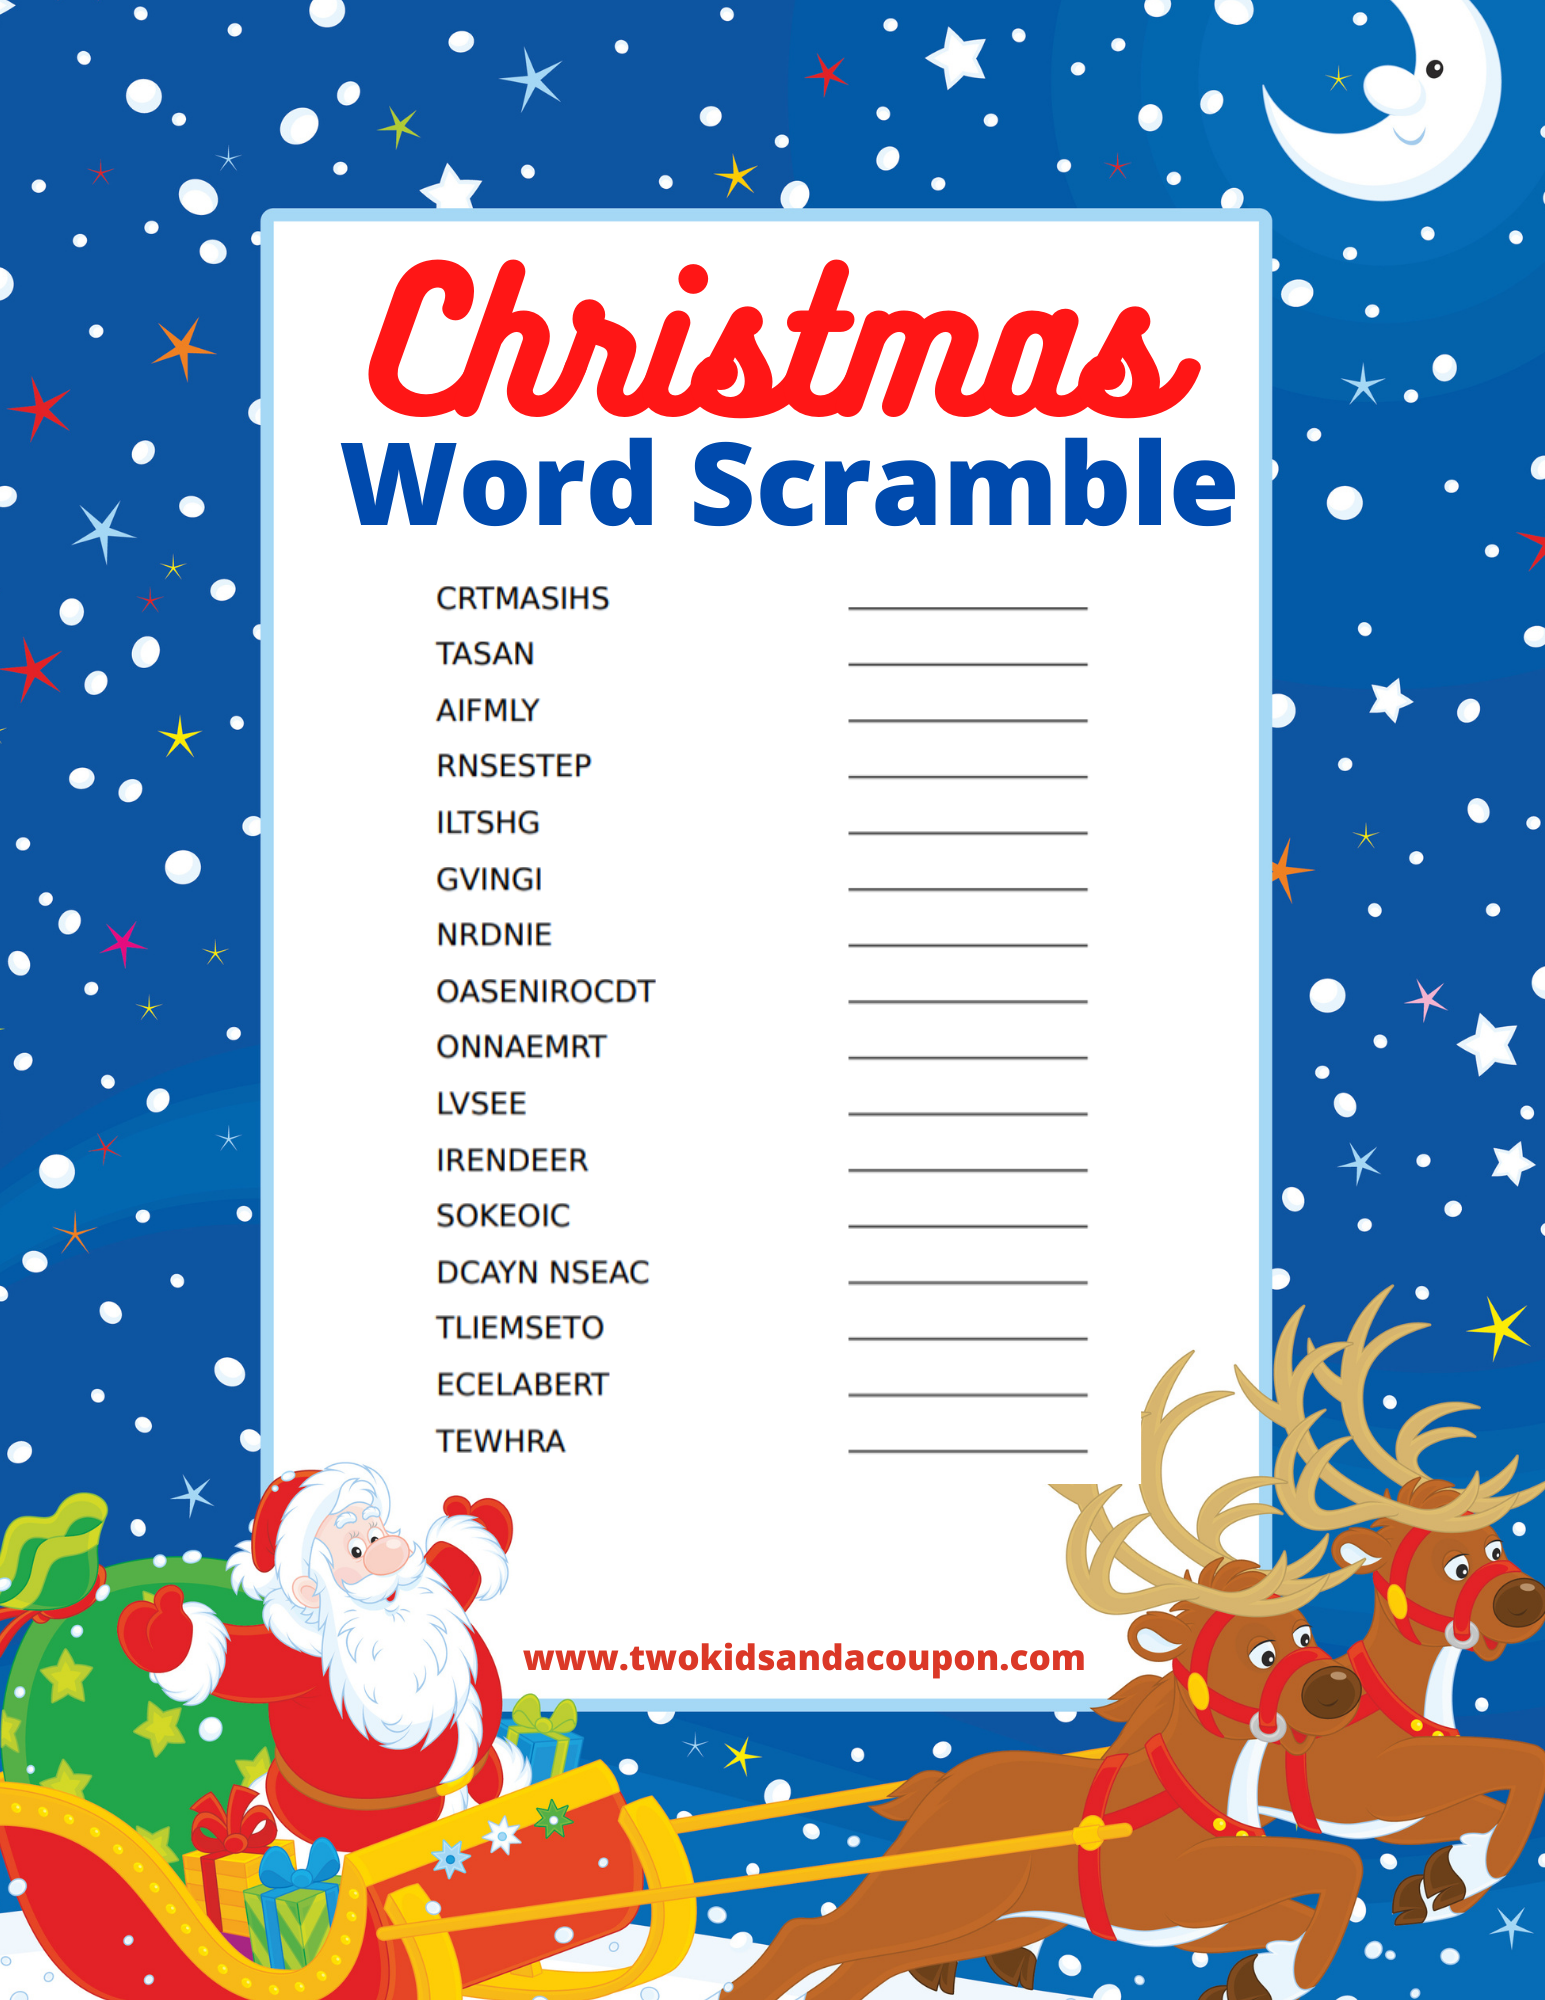 Free Christmas Word Scramble Printable For Kids AllFreePaperCrafts com